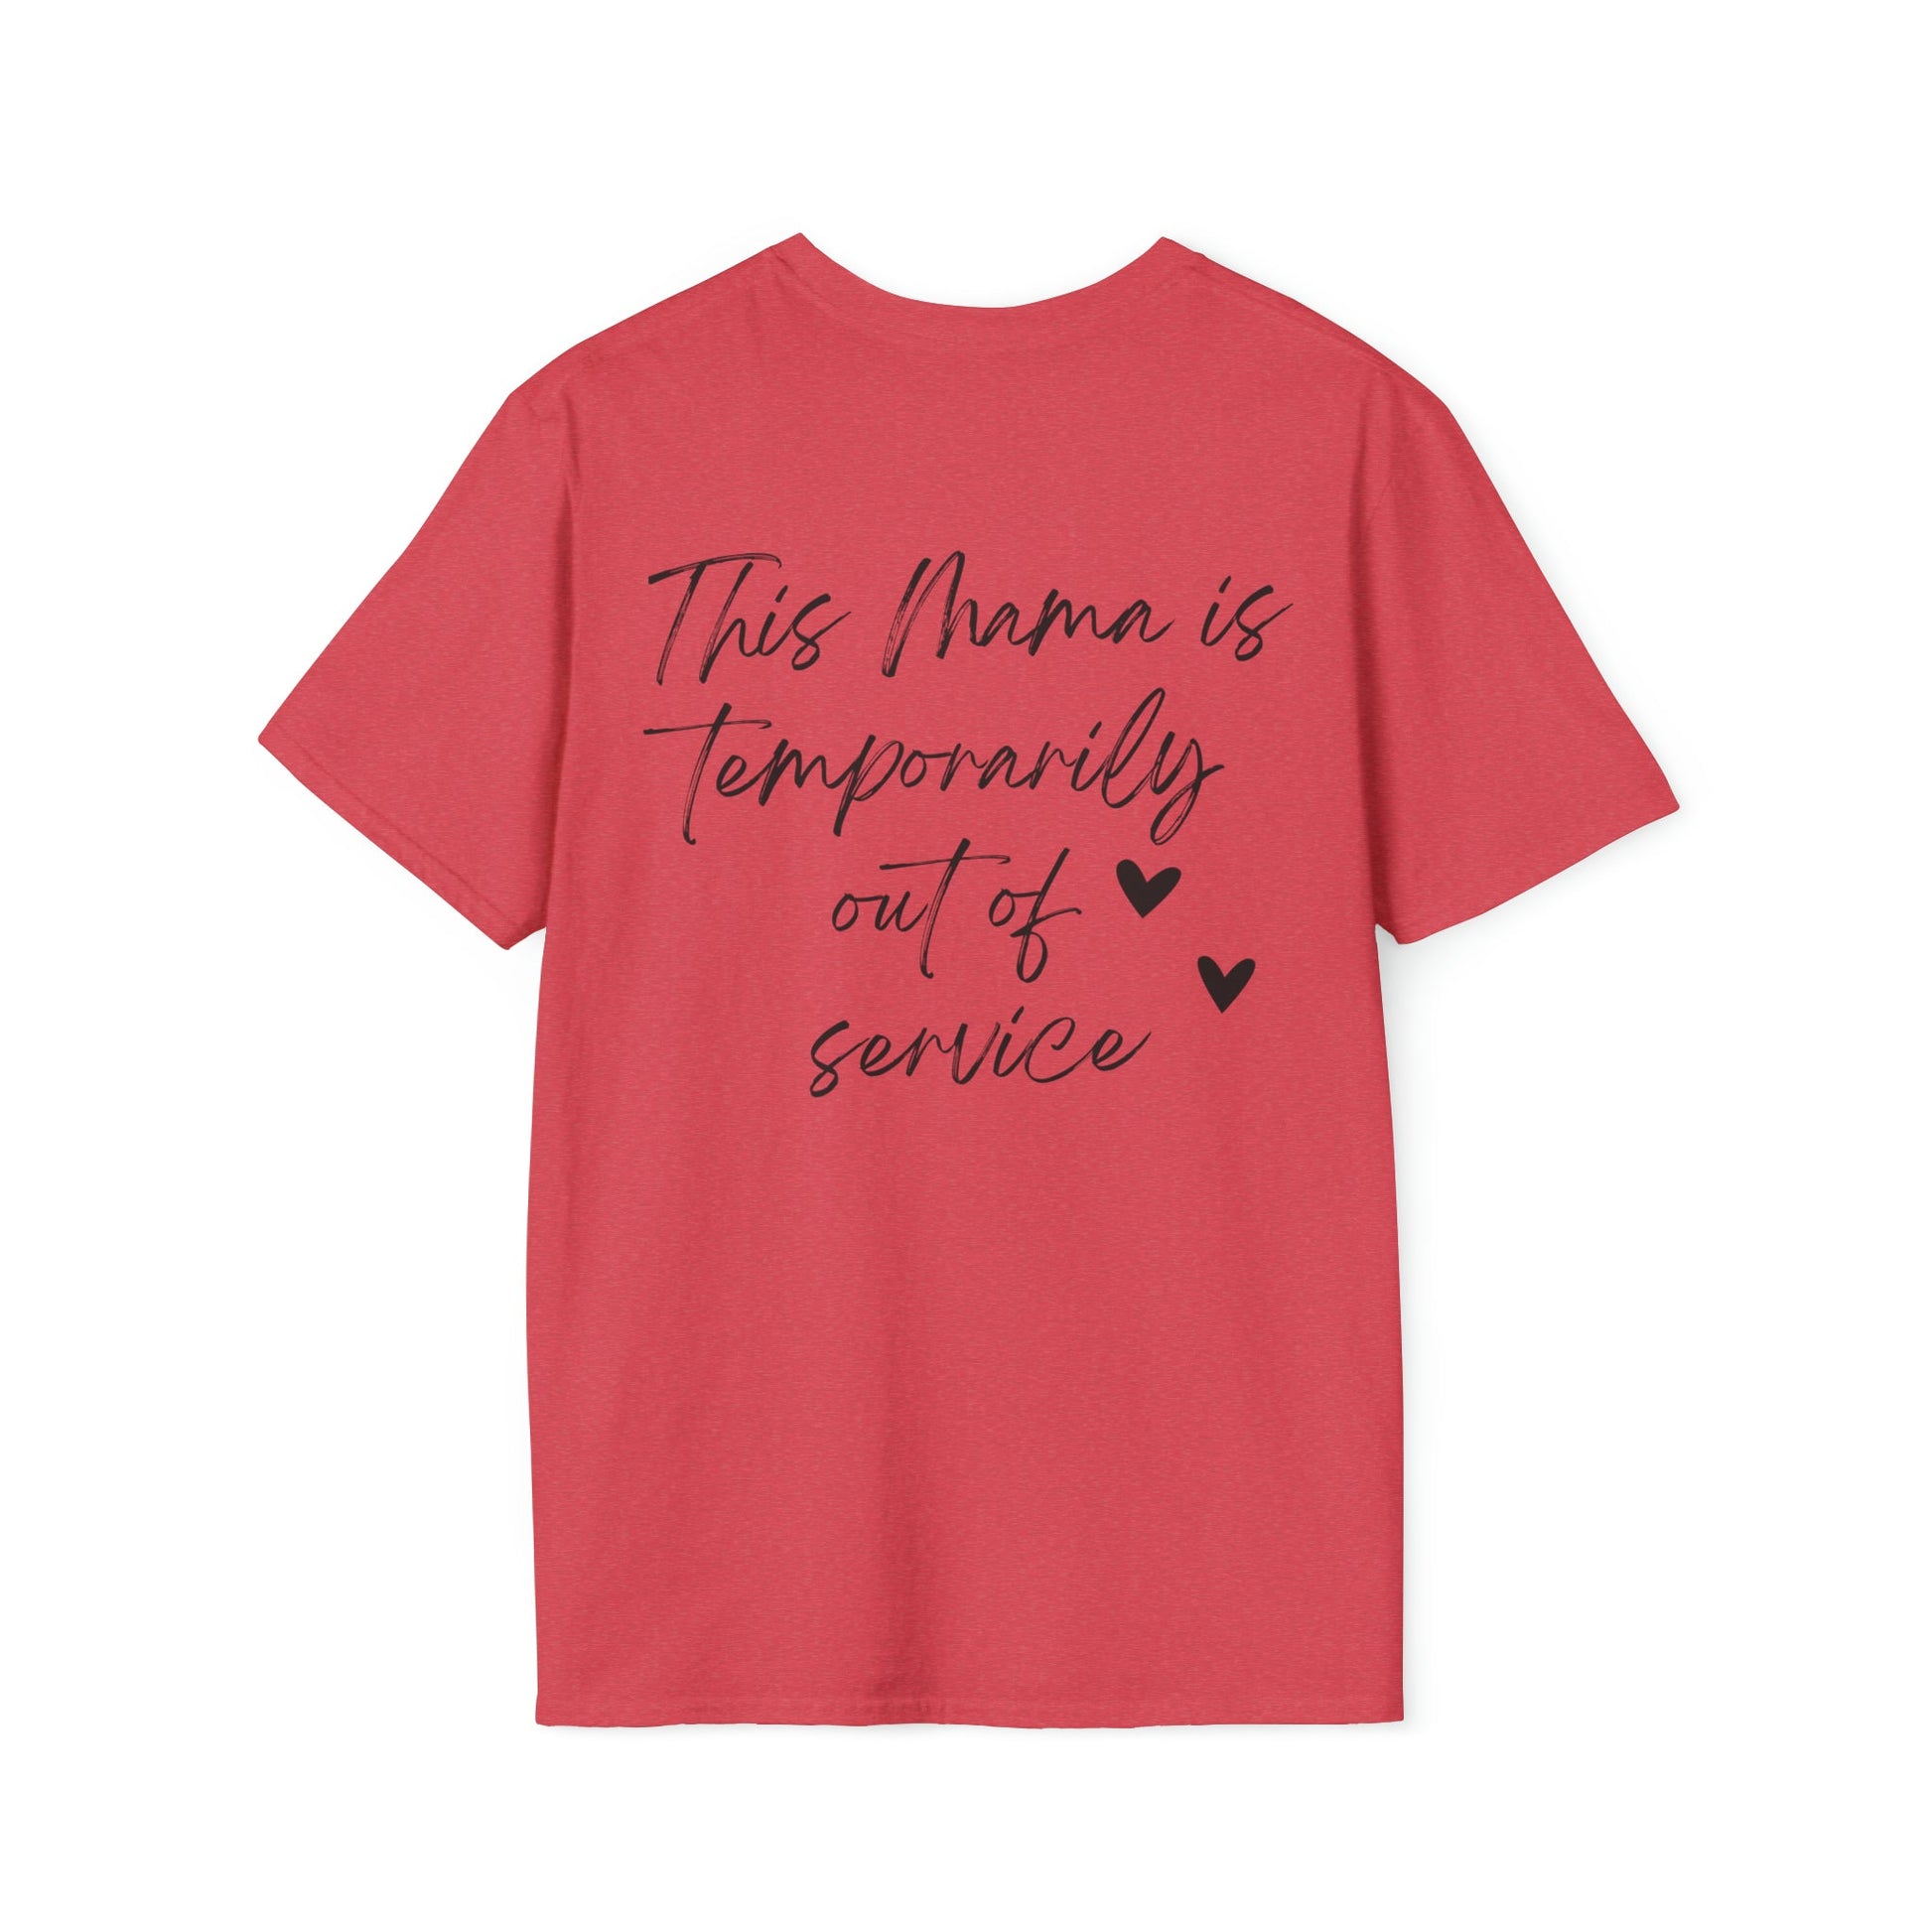 Mama Time Shirt - T - Shirt